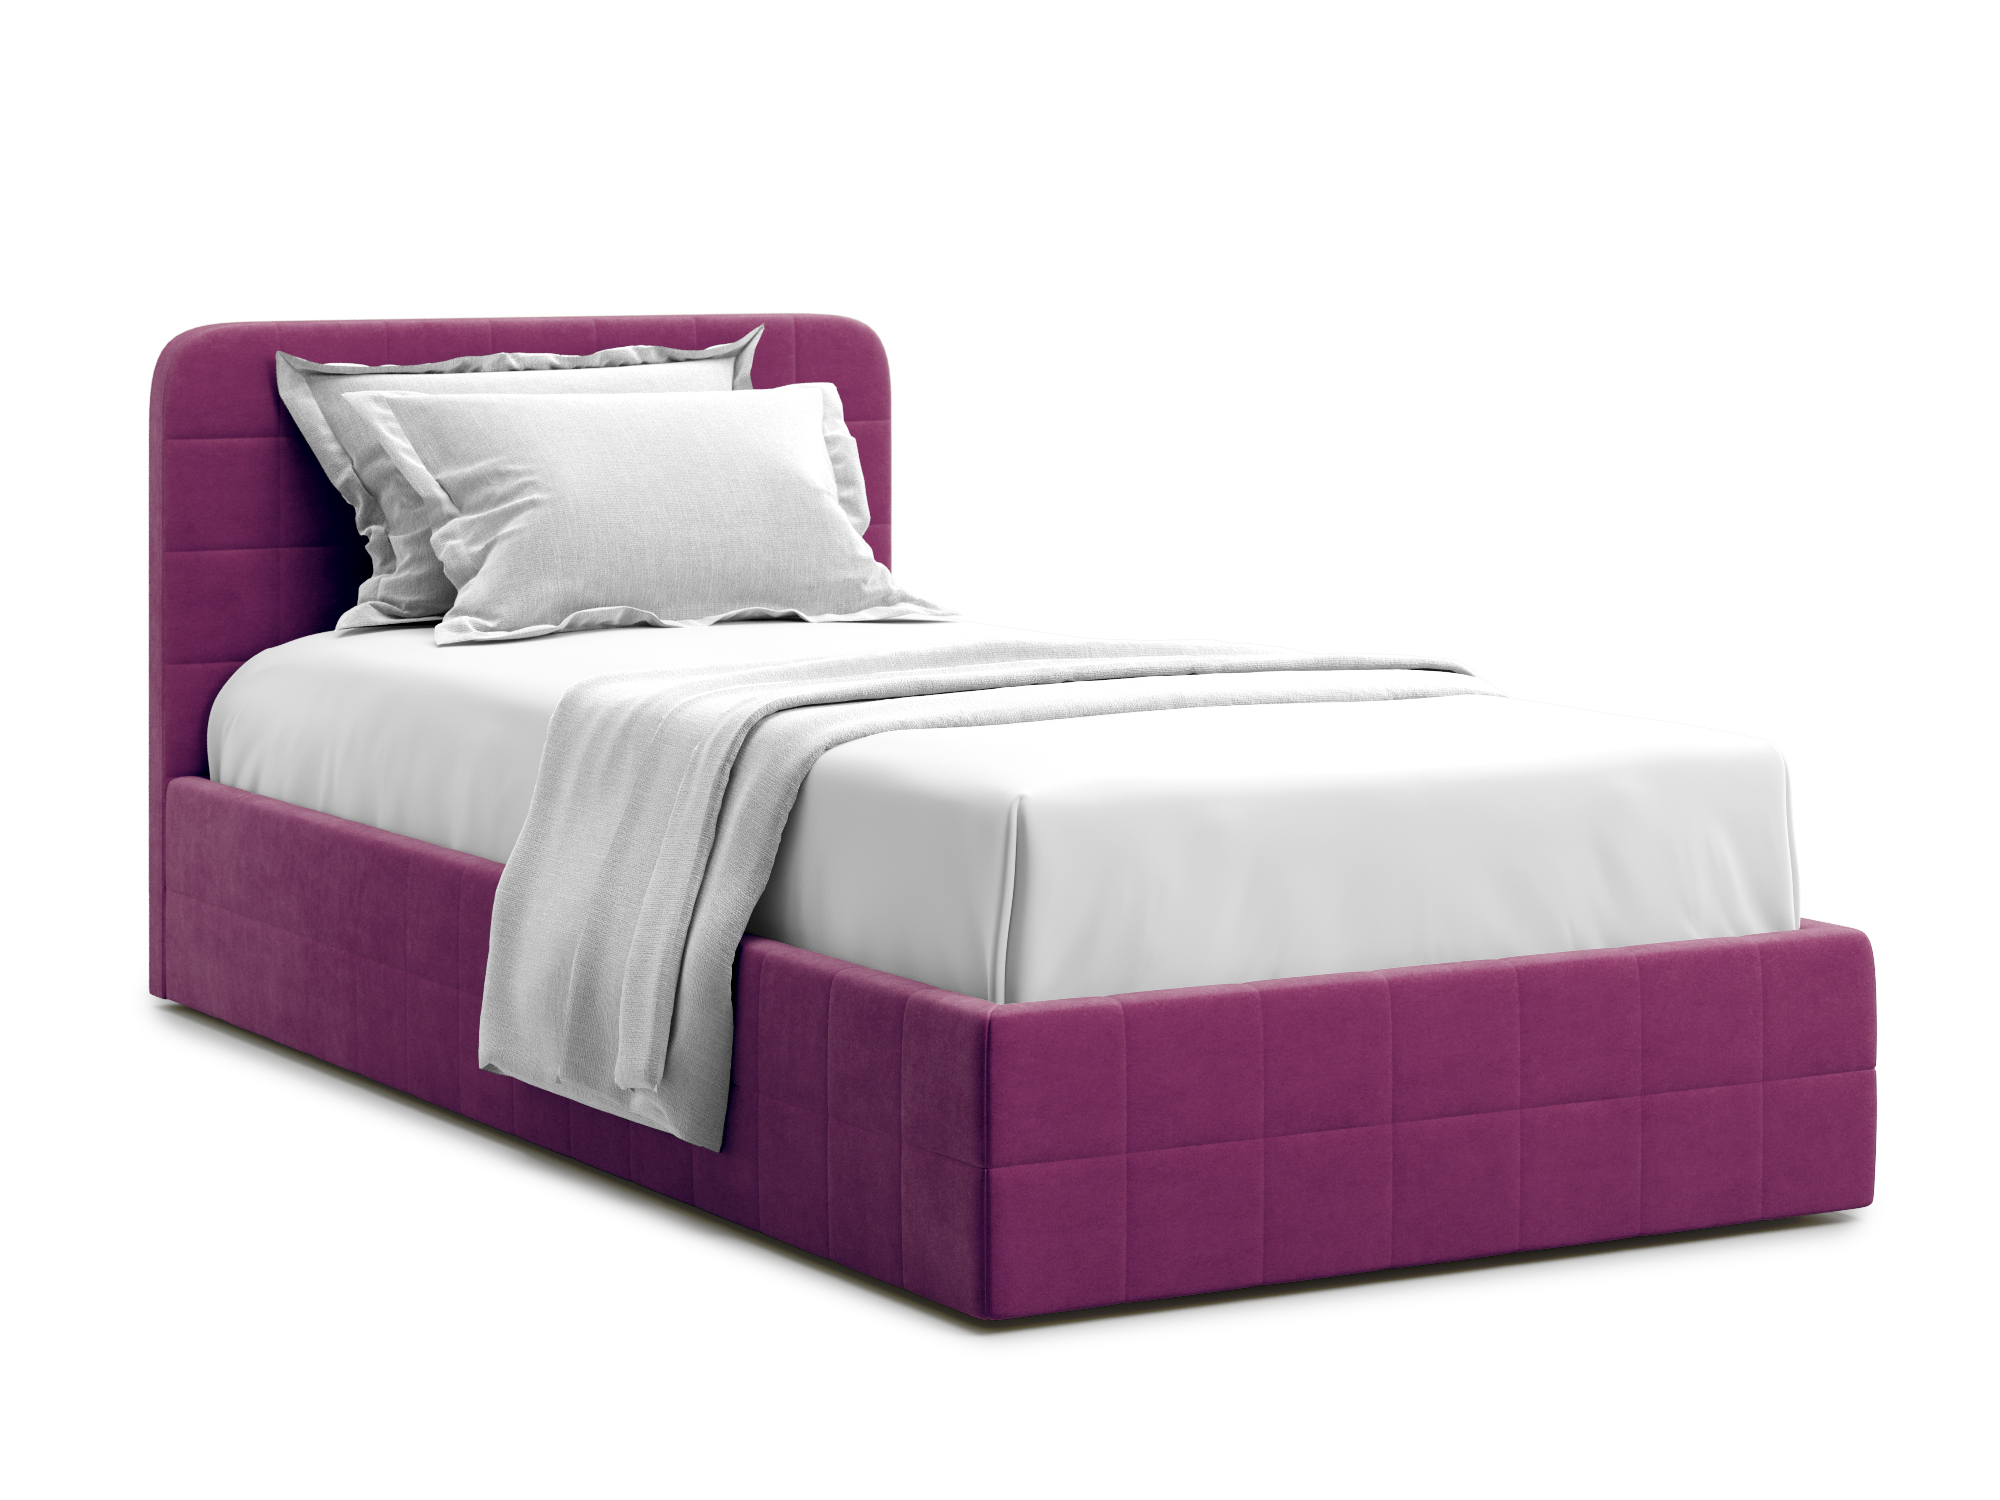 Кровать Adda 90 Velutto 15 Фиолетовый, Массив, ДСП кровать adda 120 velutto 15 фиолетовый массив дсп